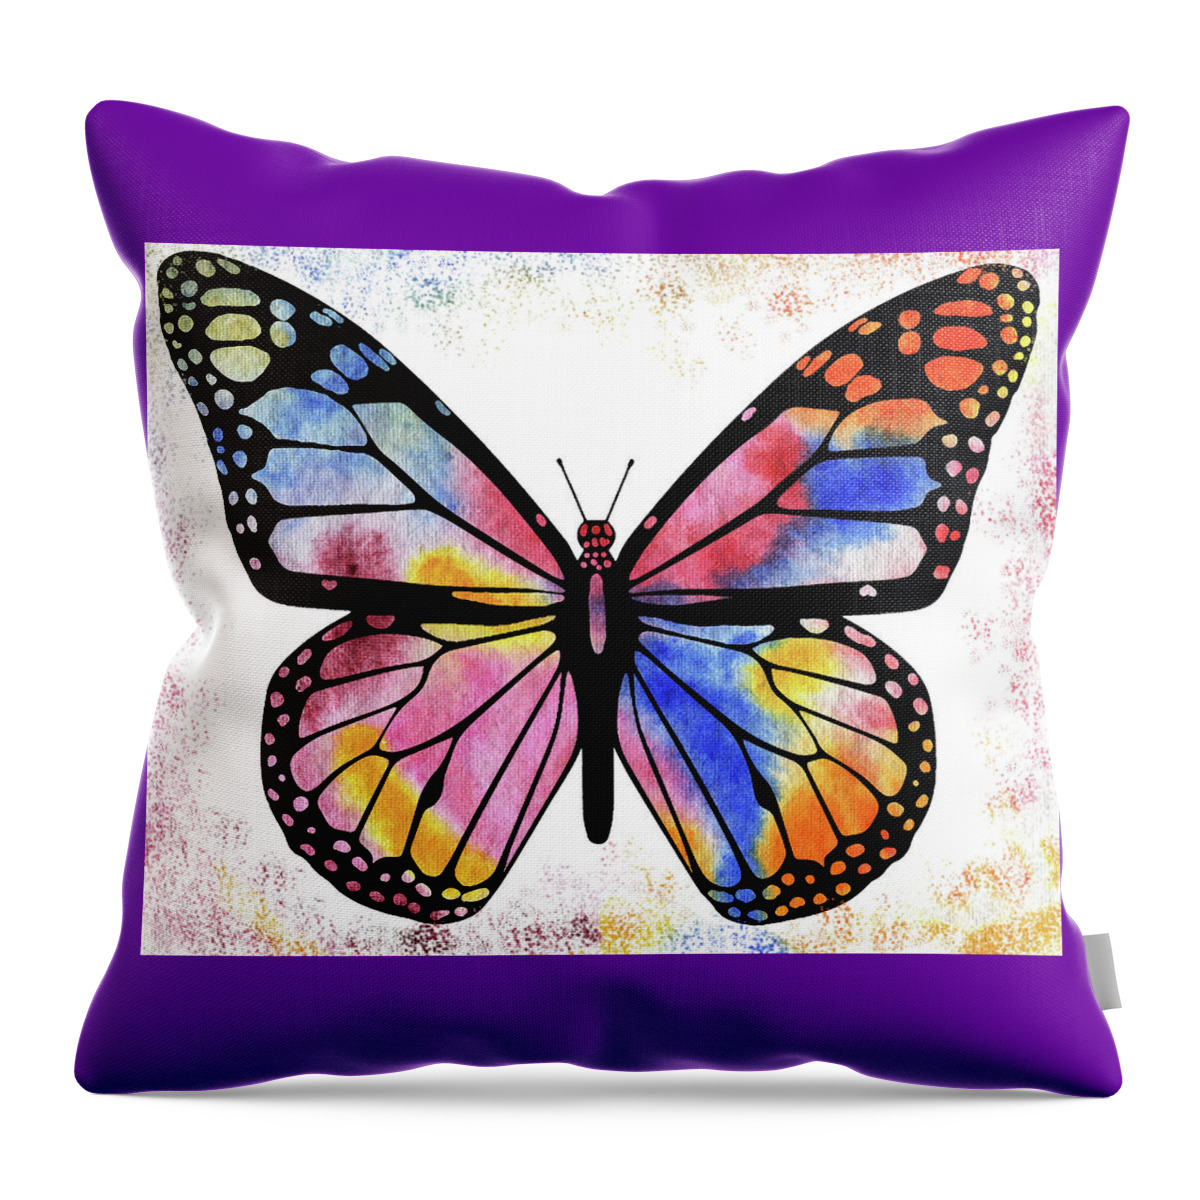 Rainbow Butterfly Throw Pillow featuring the painting Happy Rainbow Butterfly by Irina Sztukowski